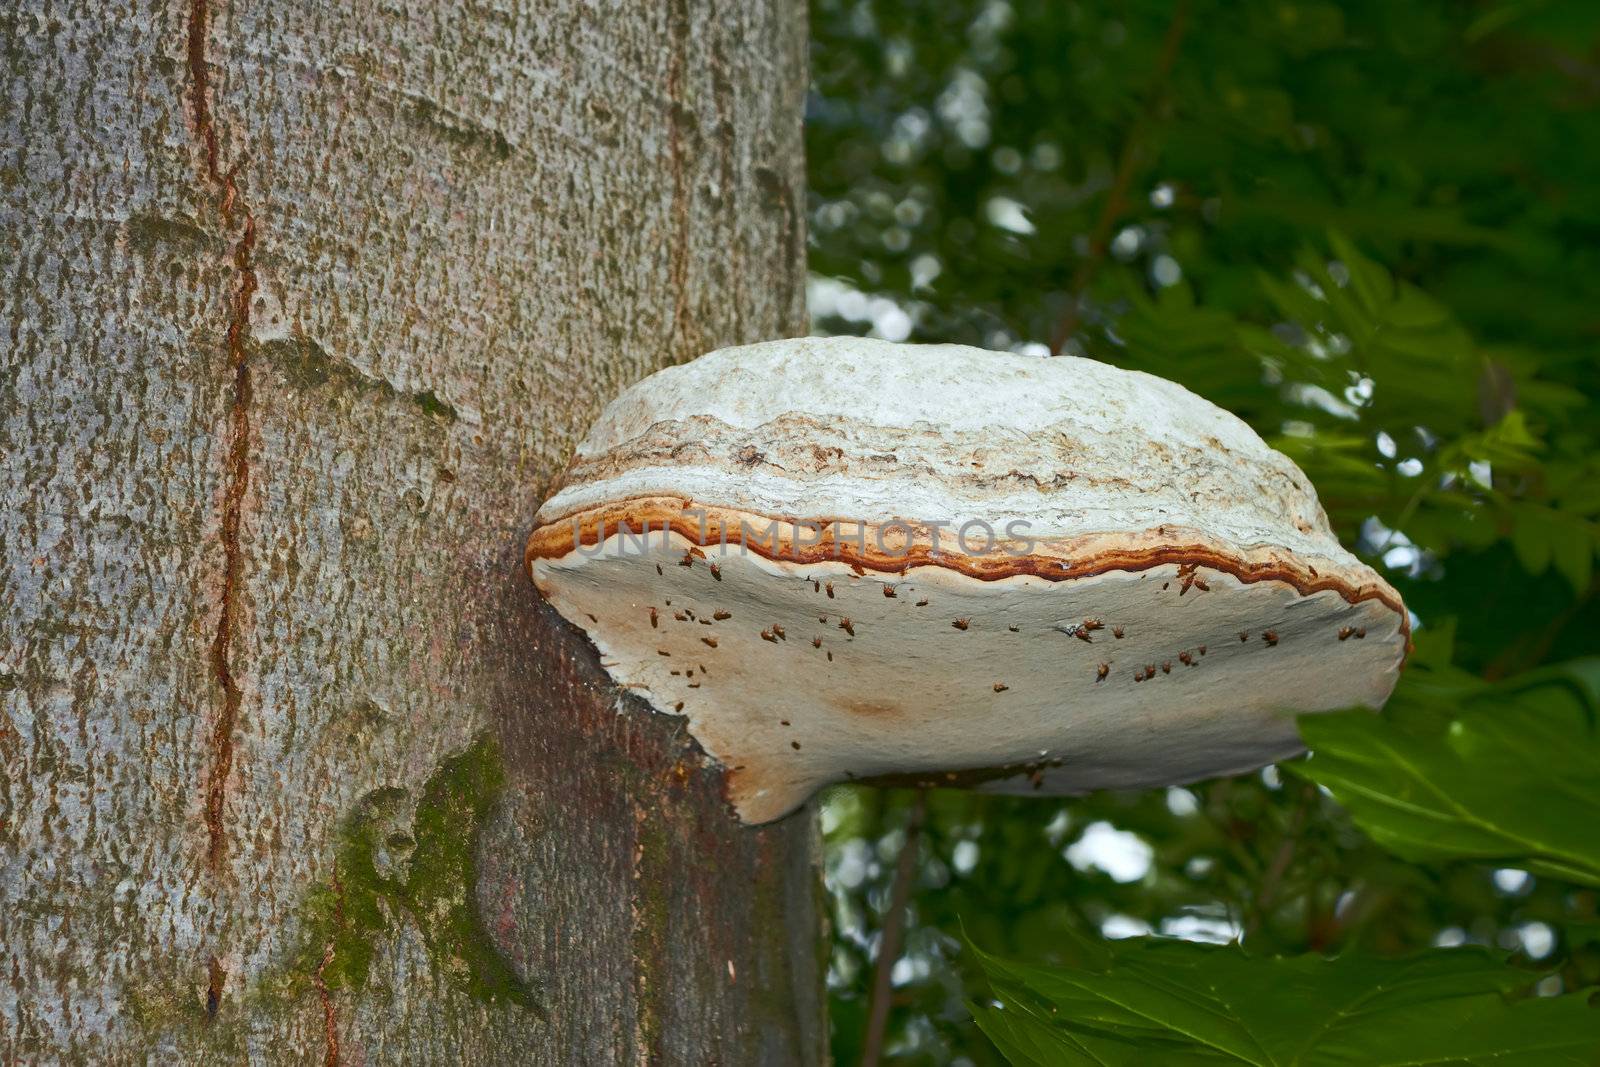 Tinder mushroom grew on beech tree by qiiip